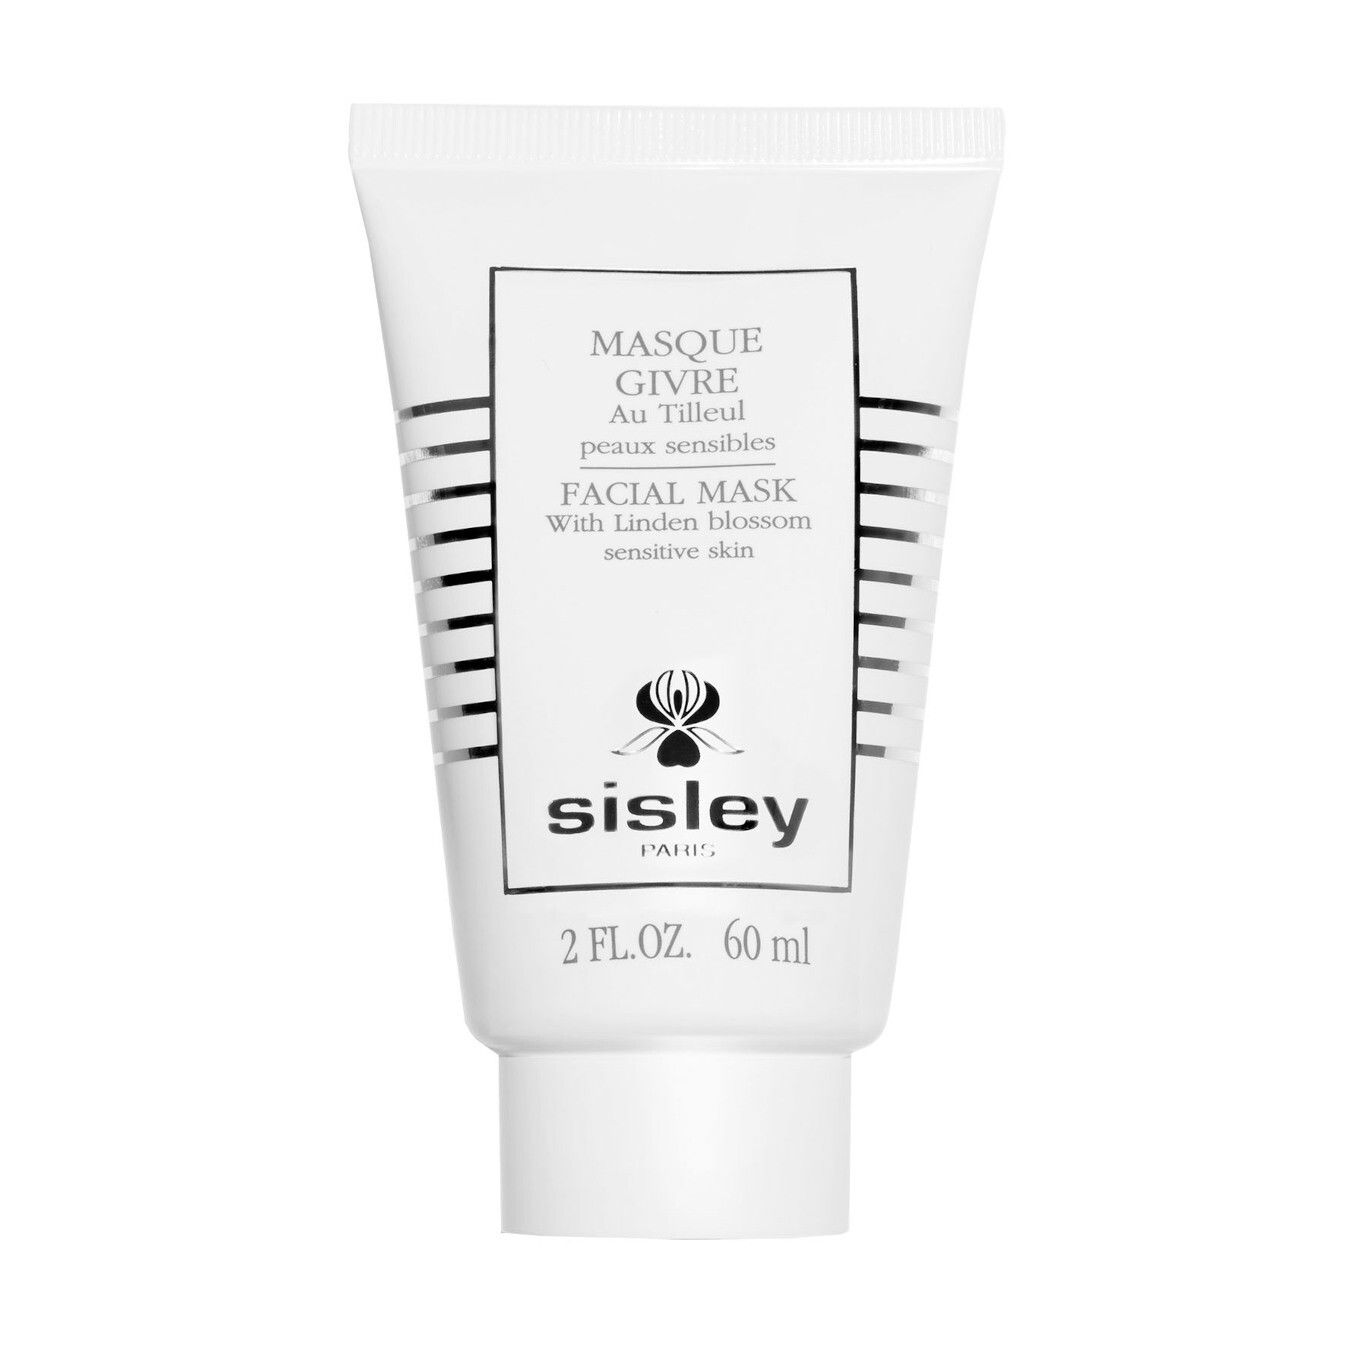 Sisley Masque Givre au Tilleul Creme-Maske von Sisley